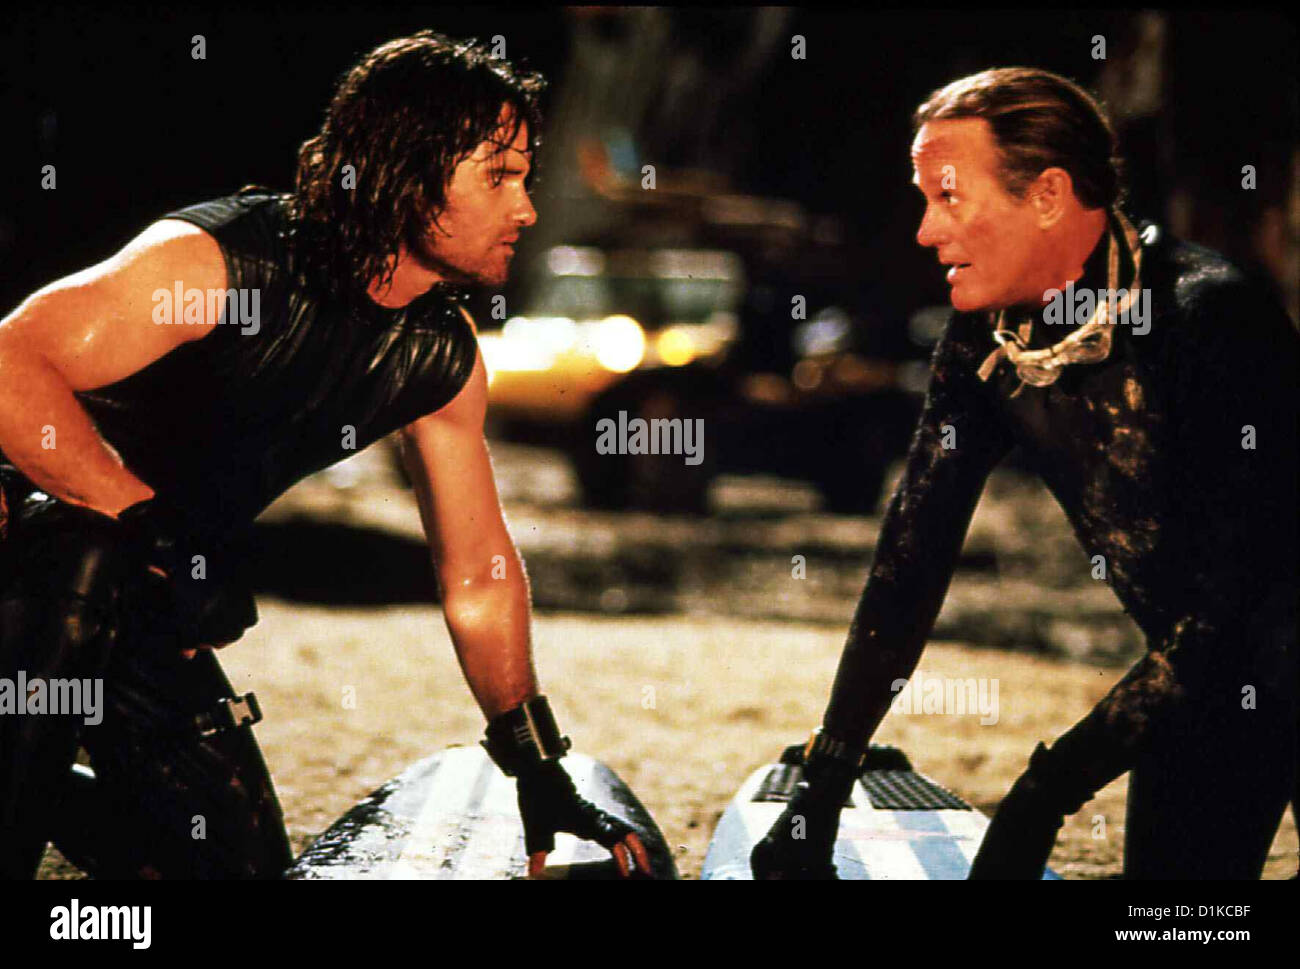 Flucht Aus L.A.   Escape From L.A.   Snake Plissken (Kurt Russell), Pipeline (Peter Fonda) *** Local Caption *** 1996  Paramount Stock Photo